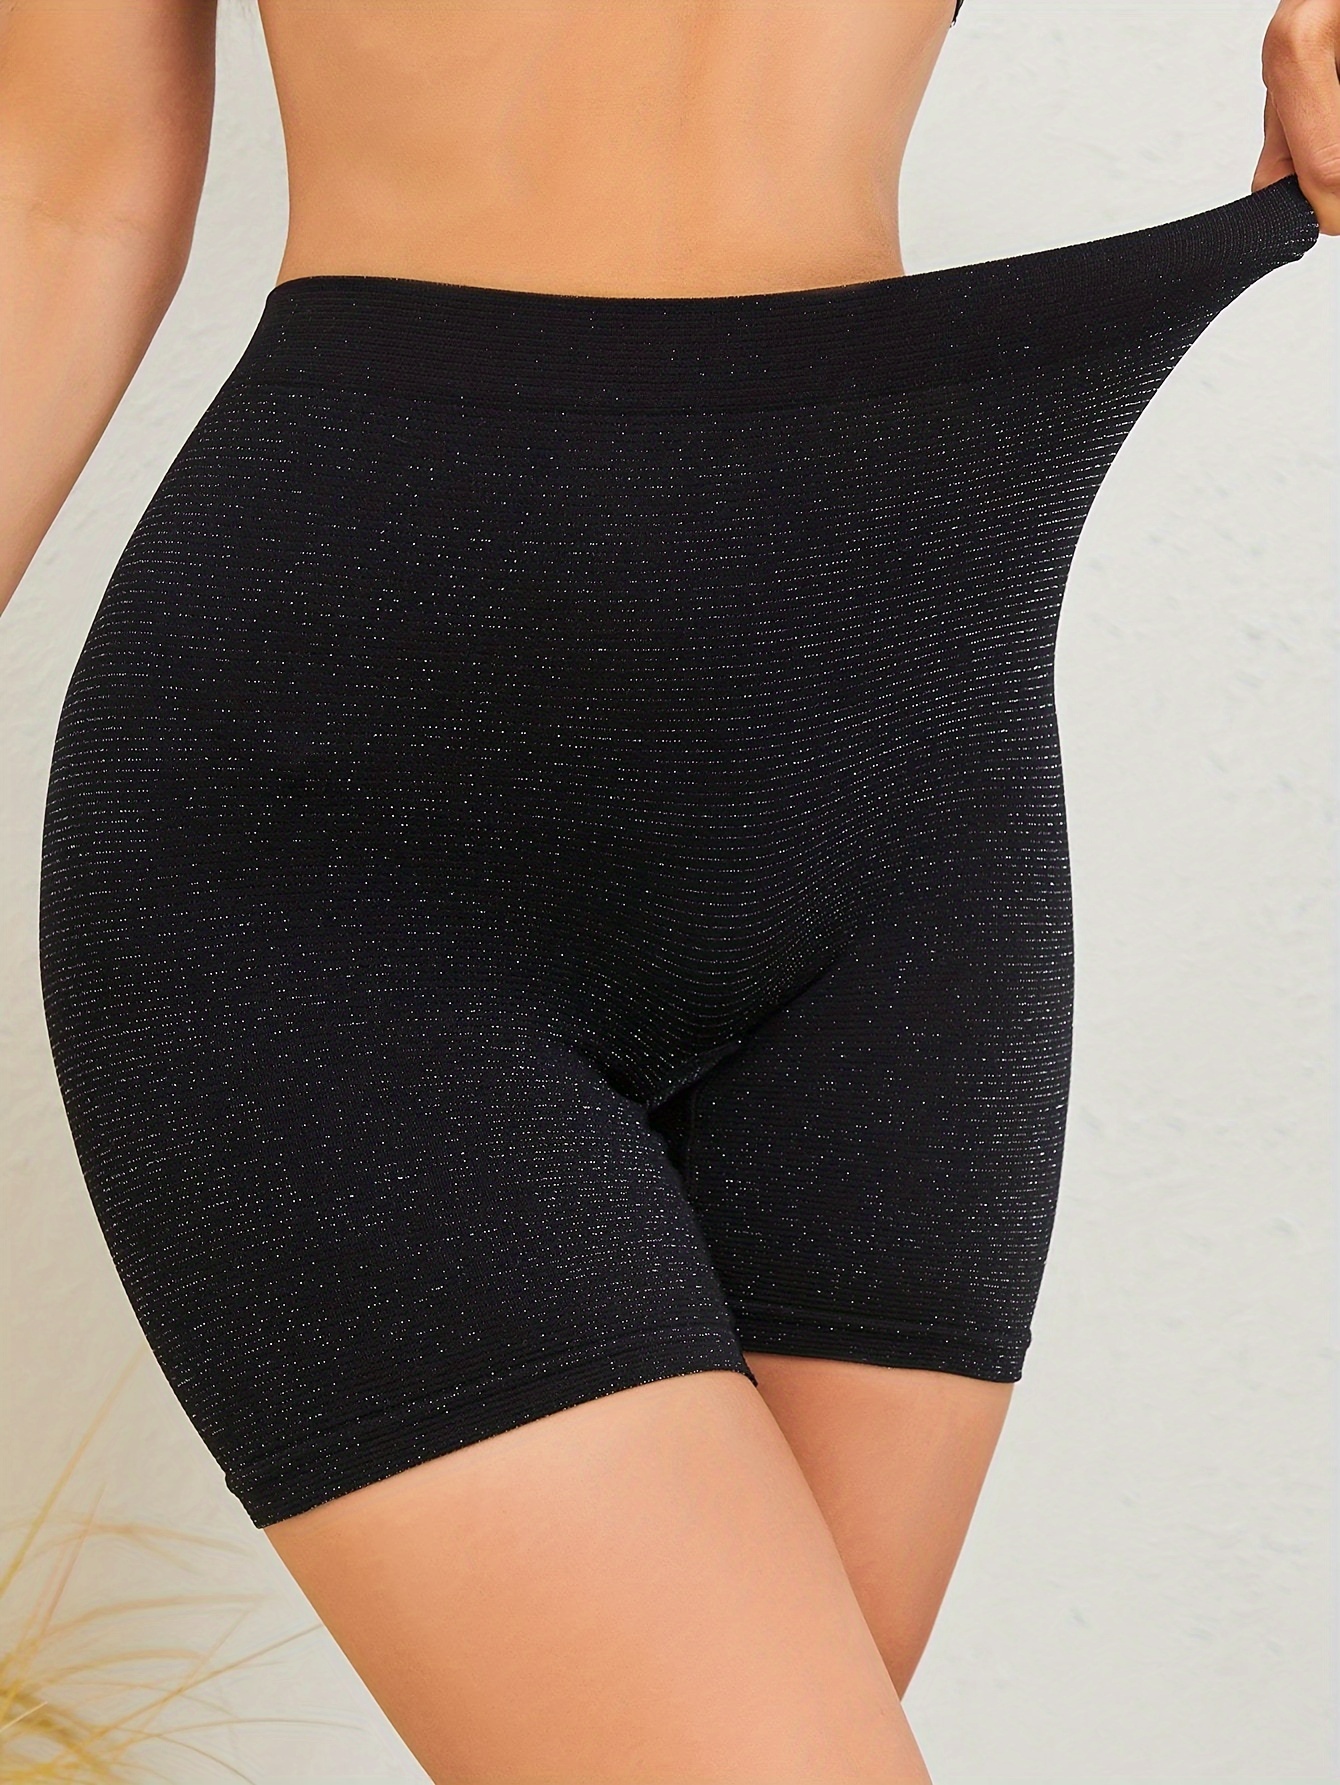 Buy blacktail Ladies boy Shorts Panties Combo,Ladies Panty,Ladies